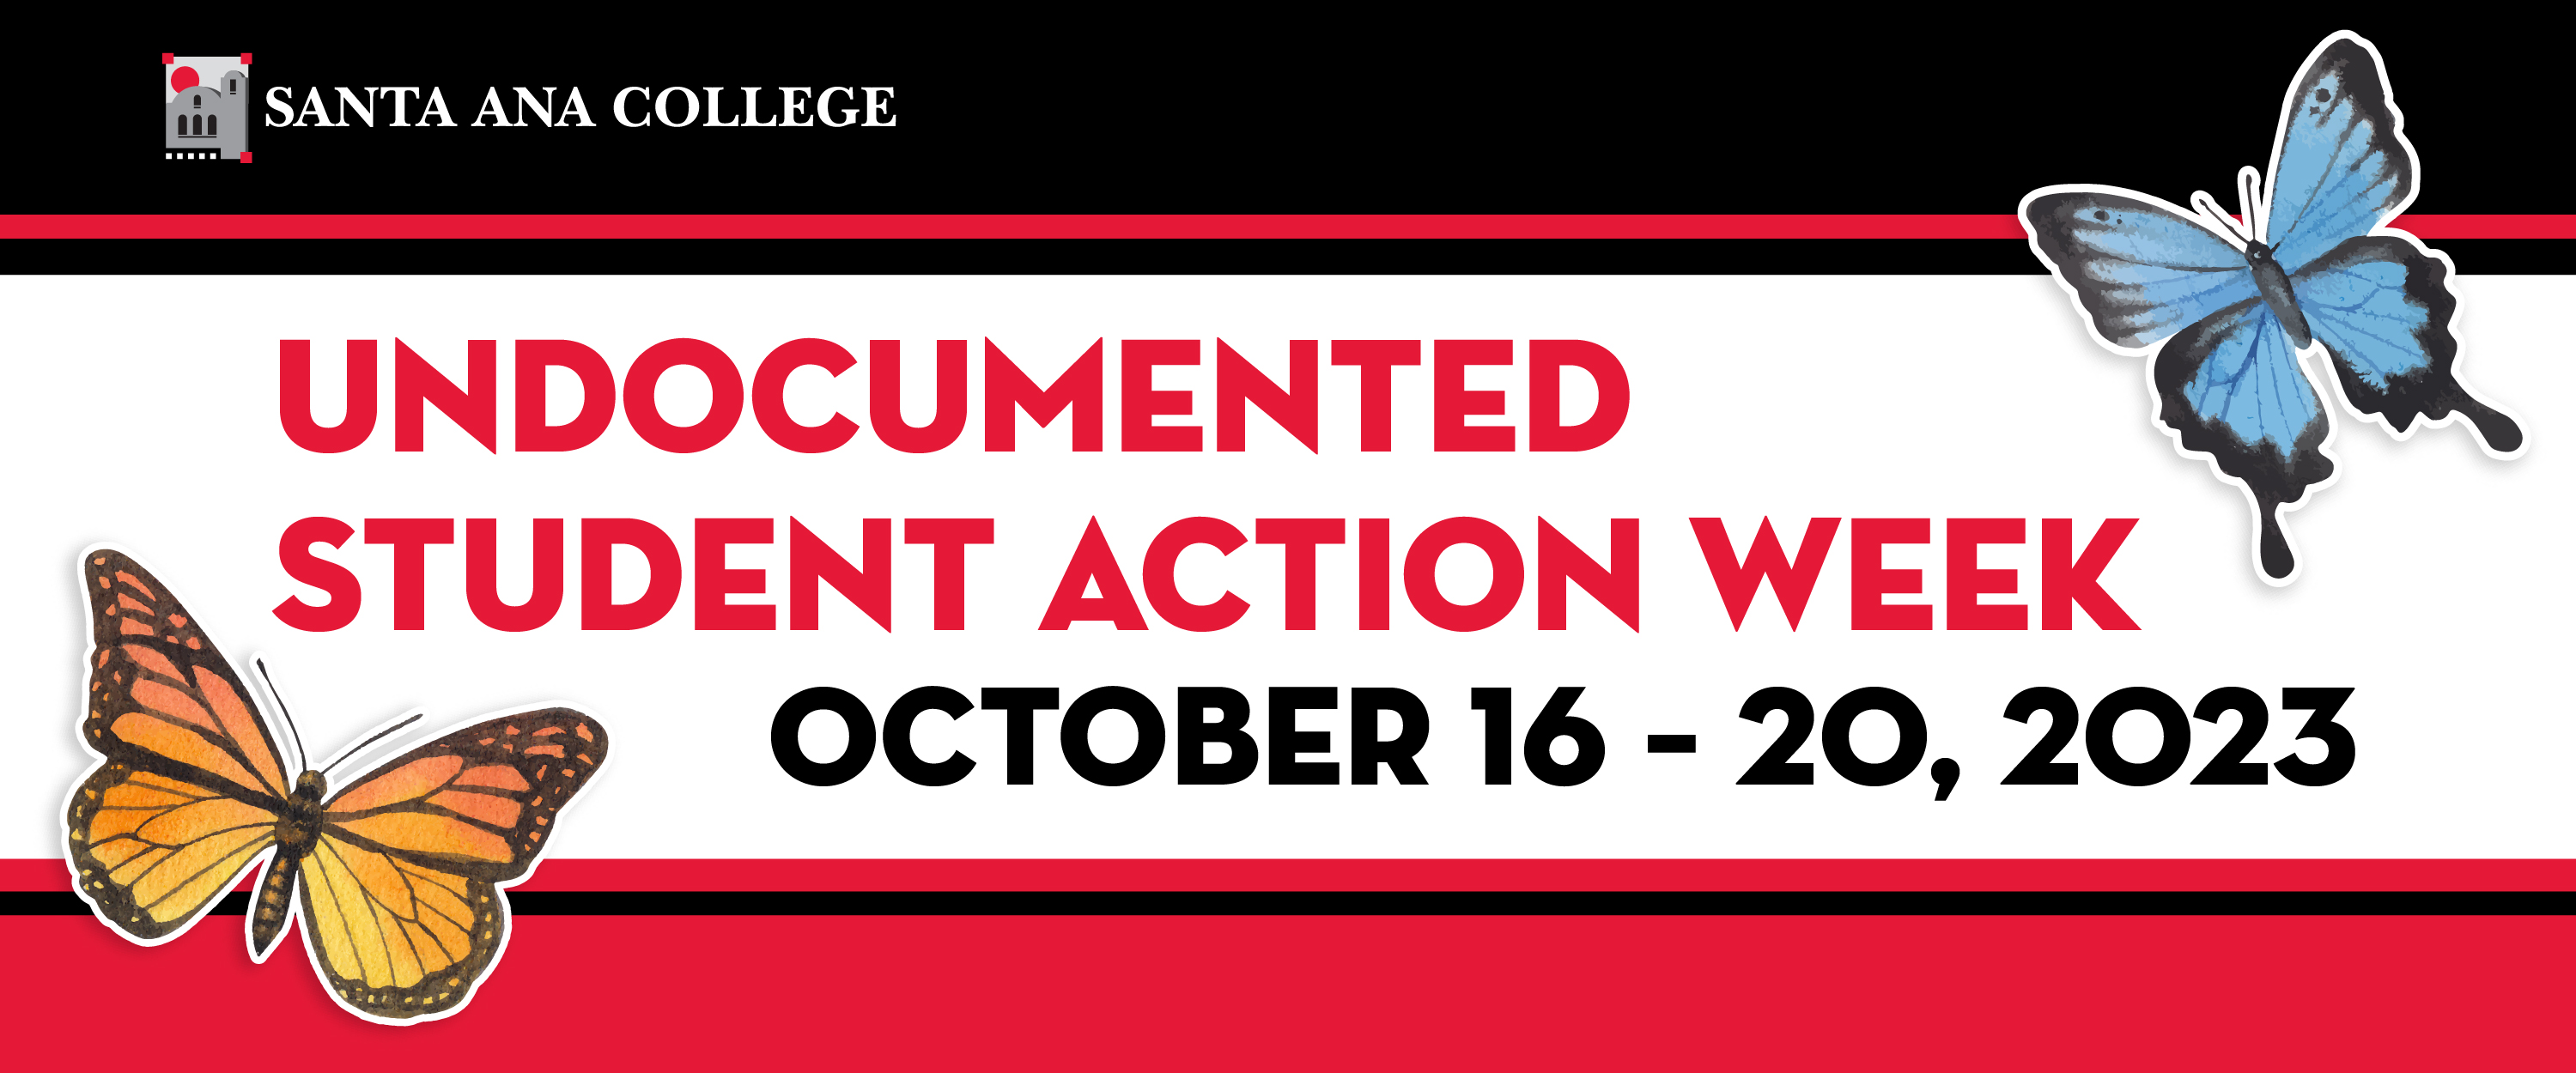 Undocumented Studnet Action Week October 16 - 20, 2023